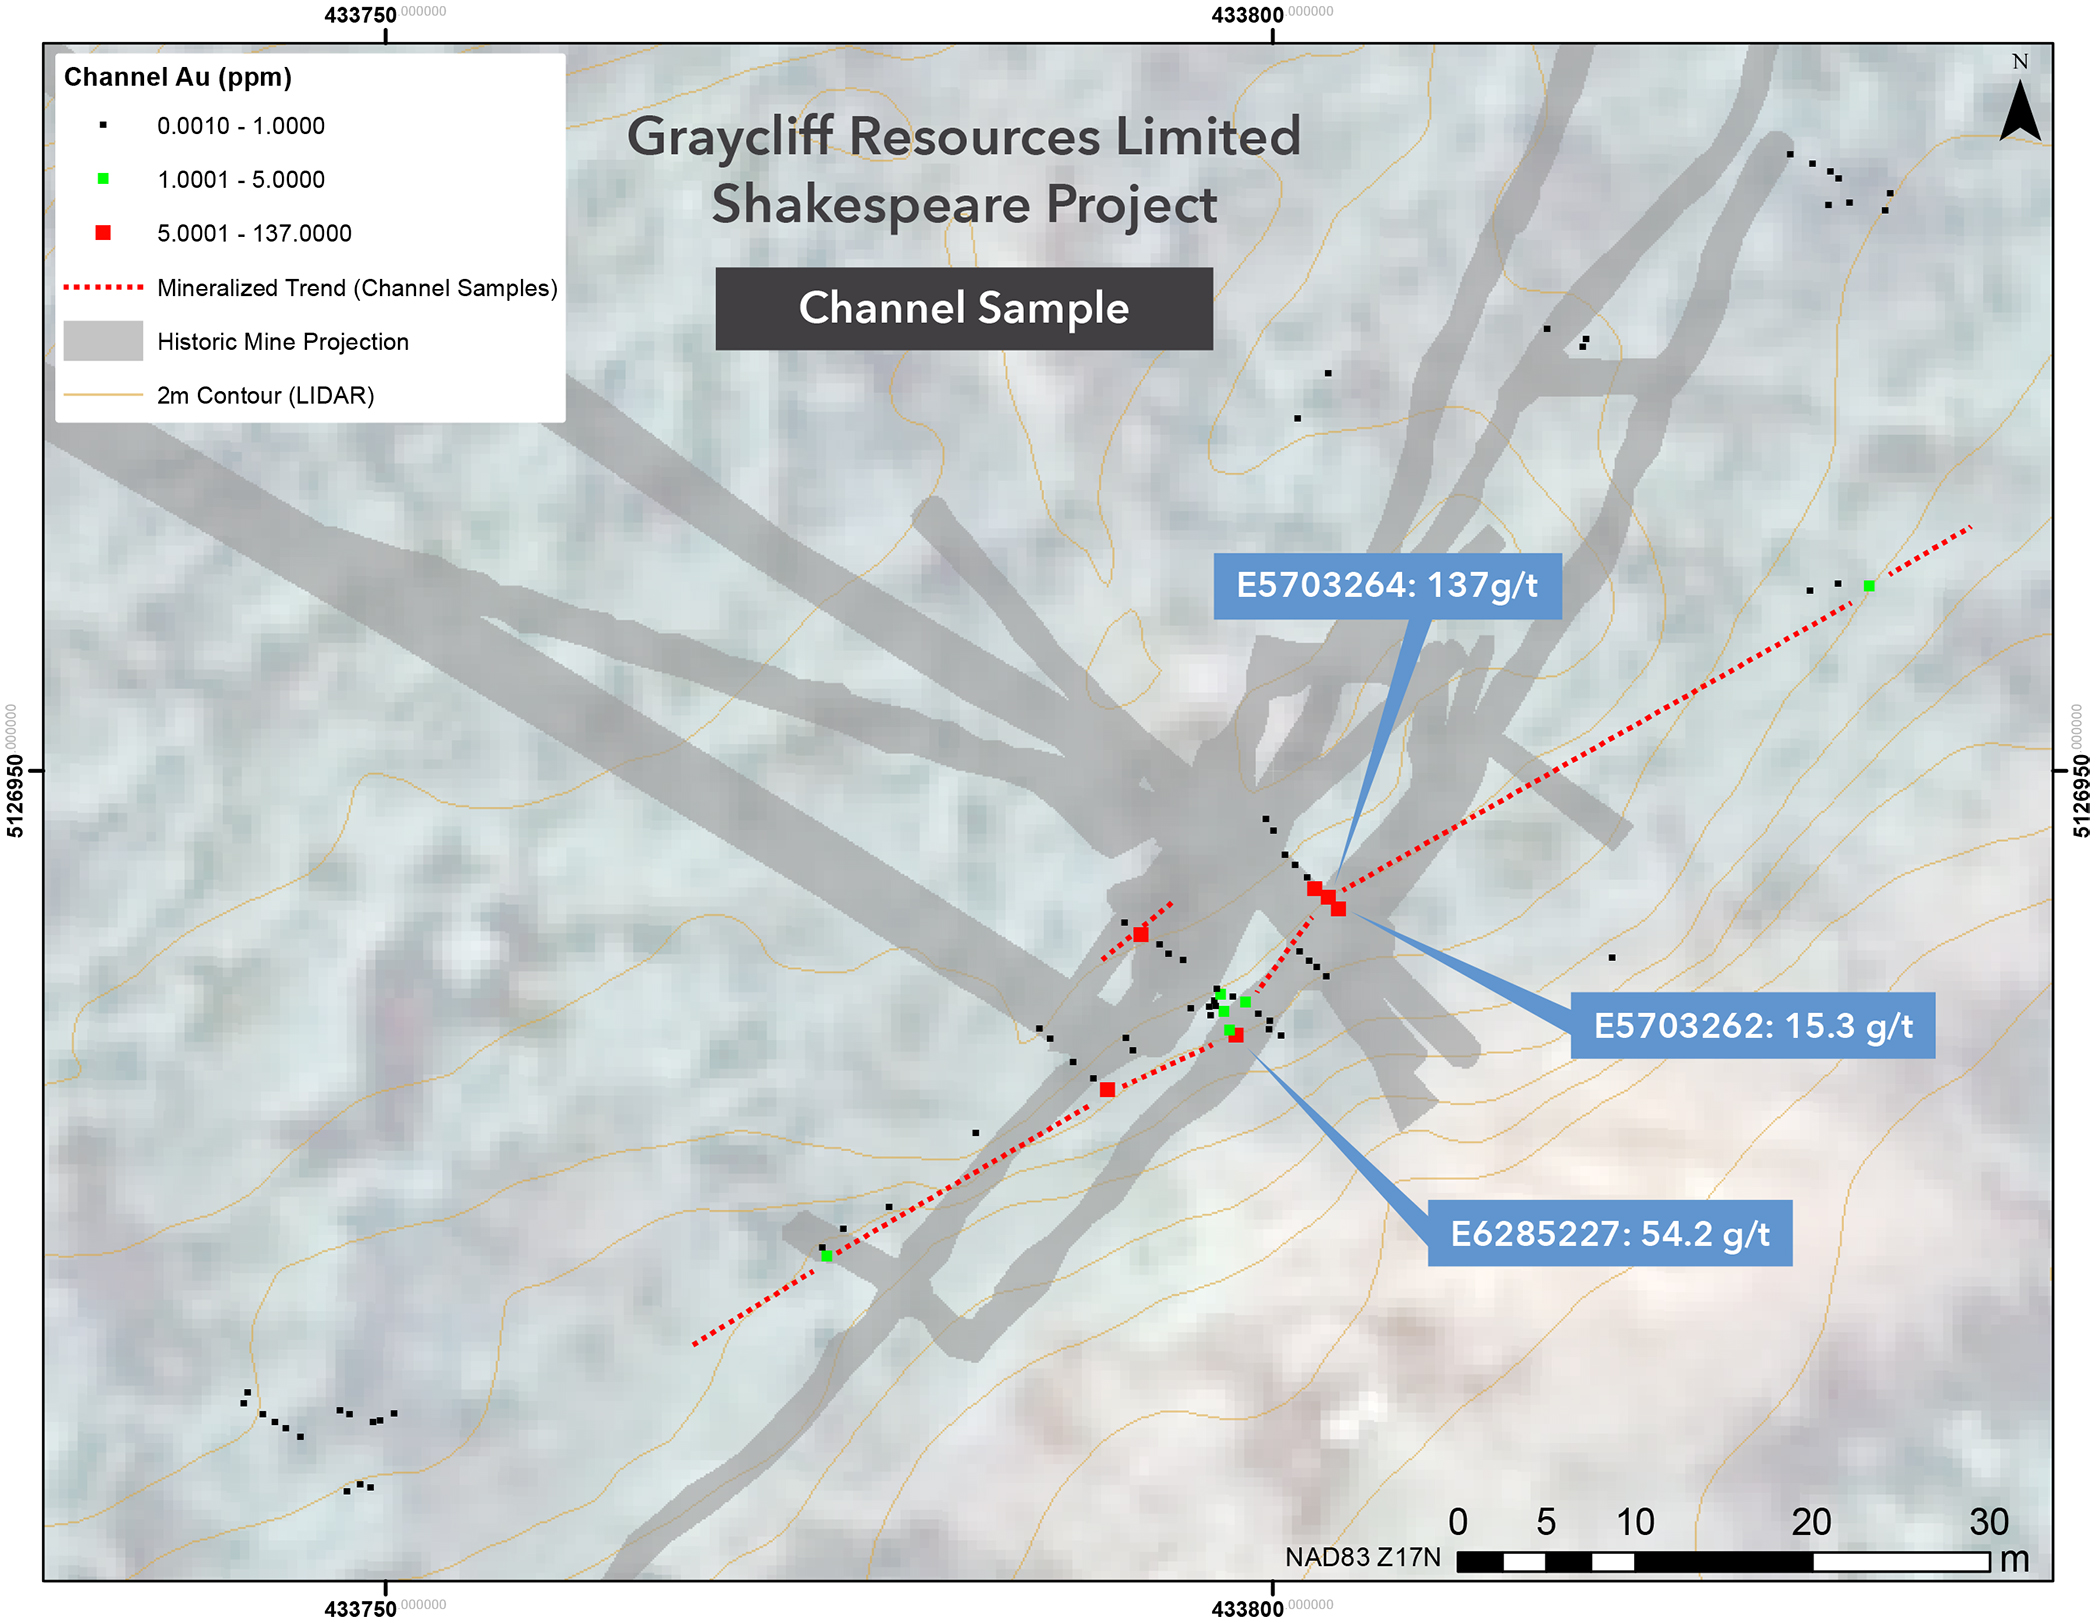 Graycliff Exploration Ltd., Tuesday, April 26, 2022, Press release picture